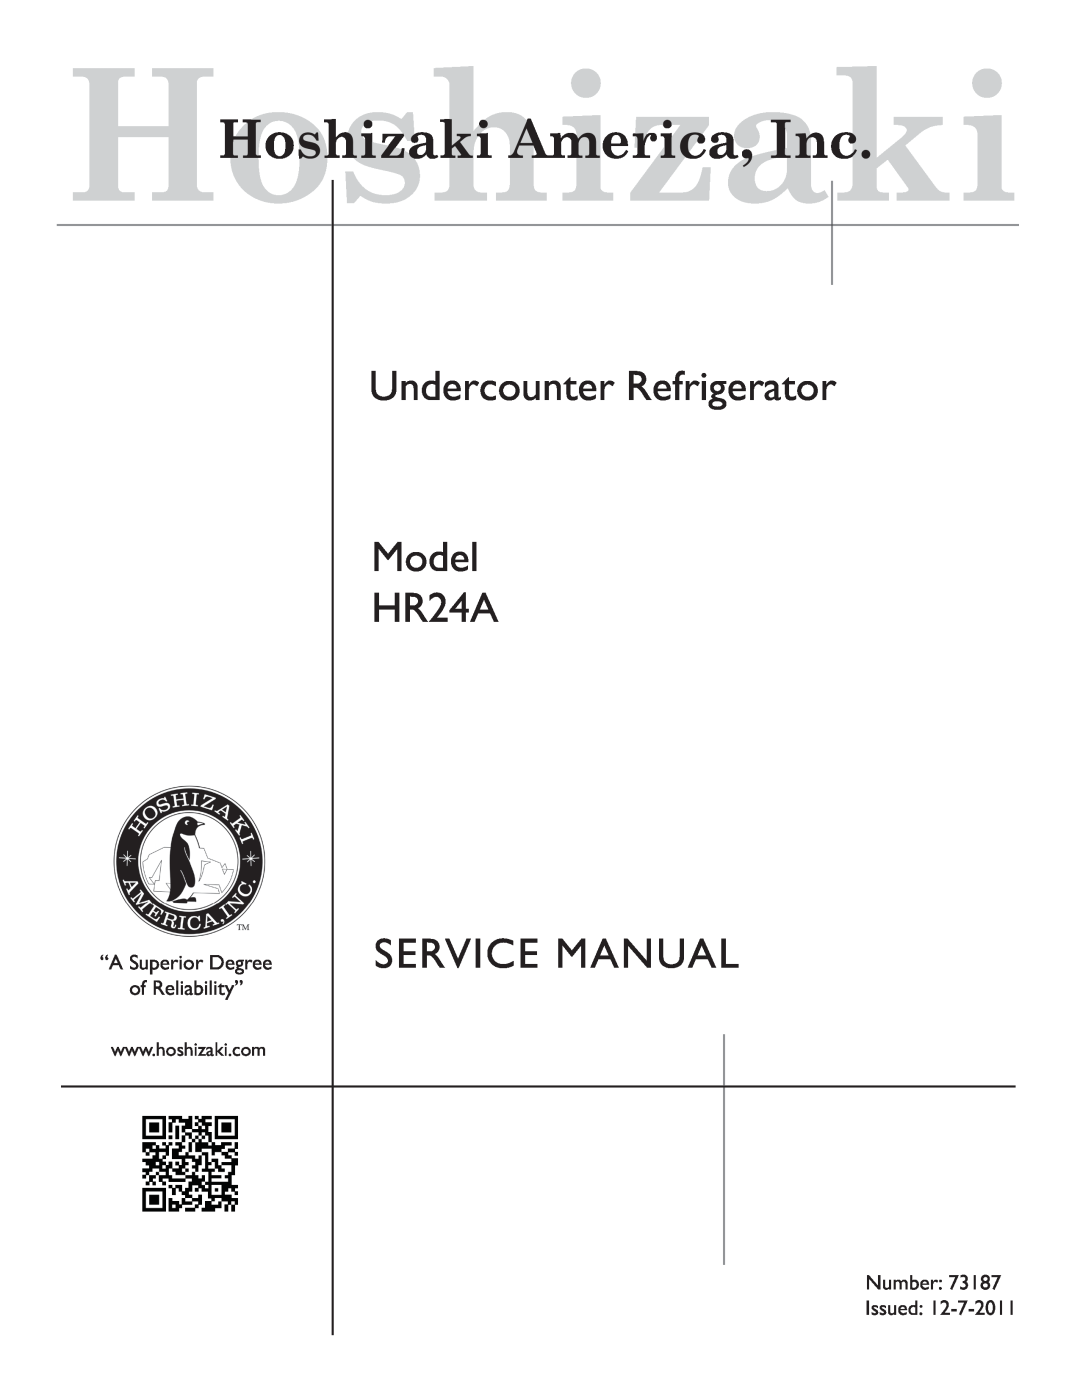 Hoshizaki instruction manual Undercounter Refrigerator Model HR24A, Instruction Manual, HoshizakiHoshizaki America, Inc 